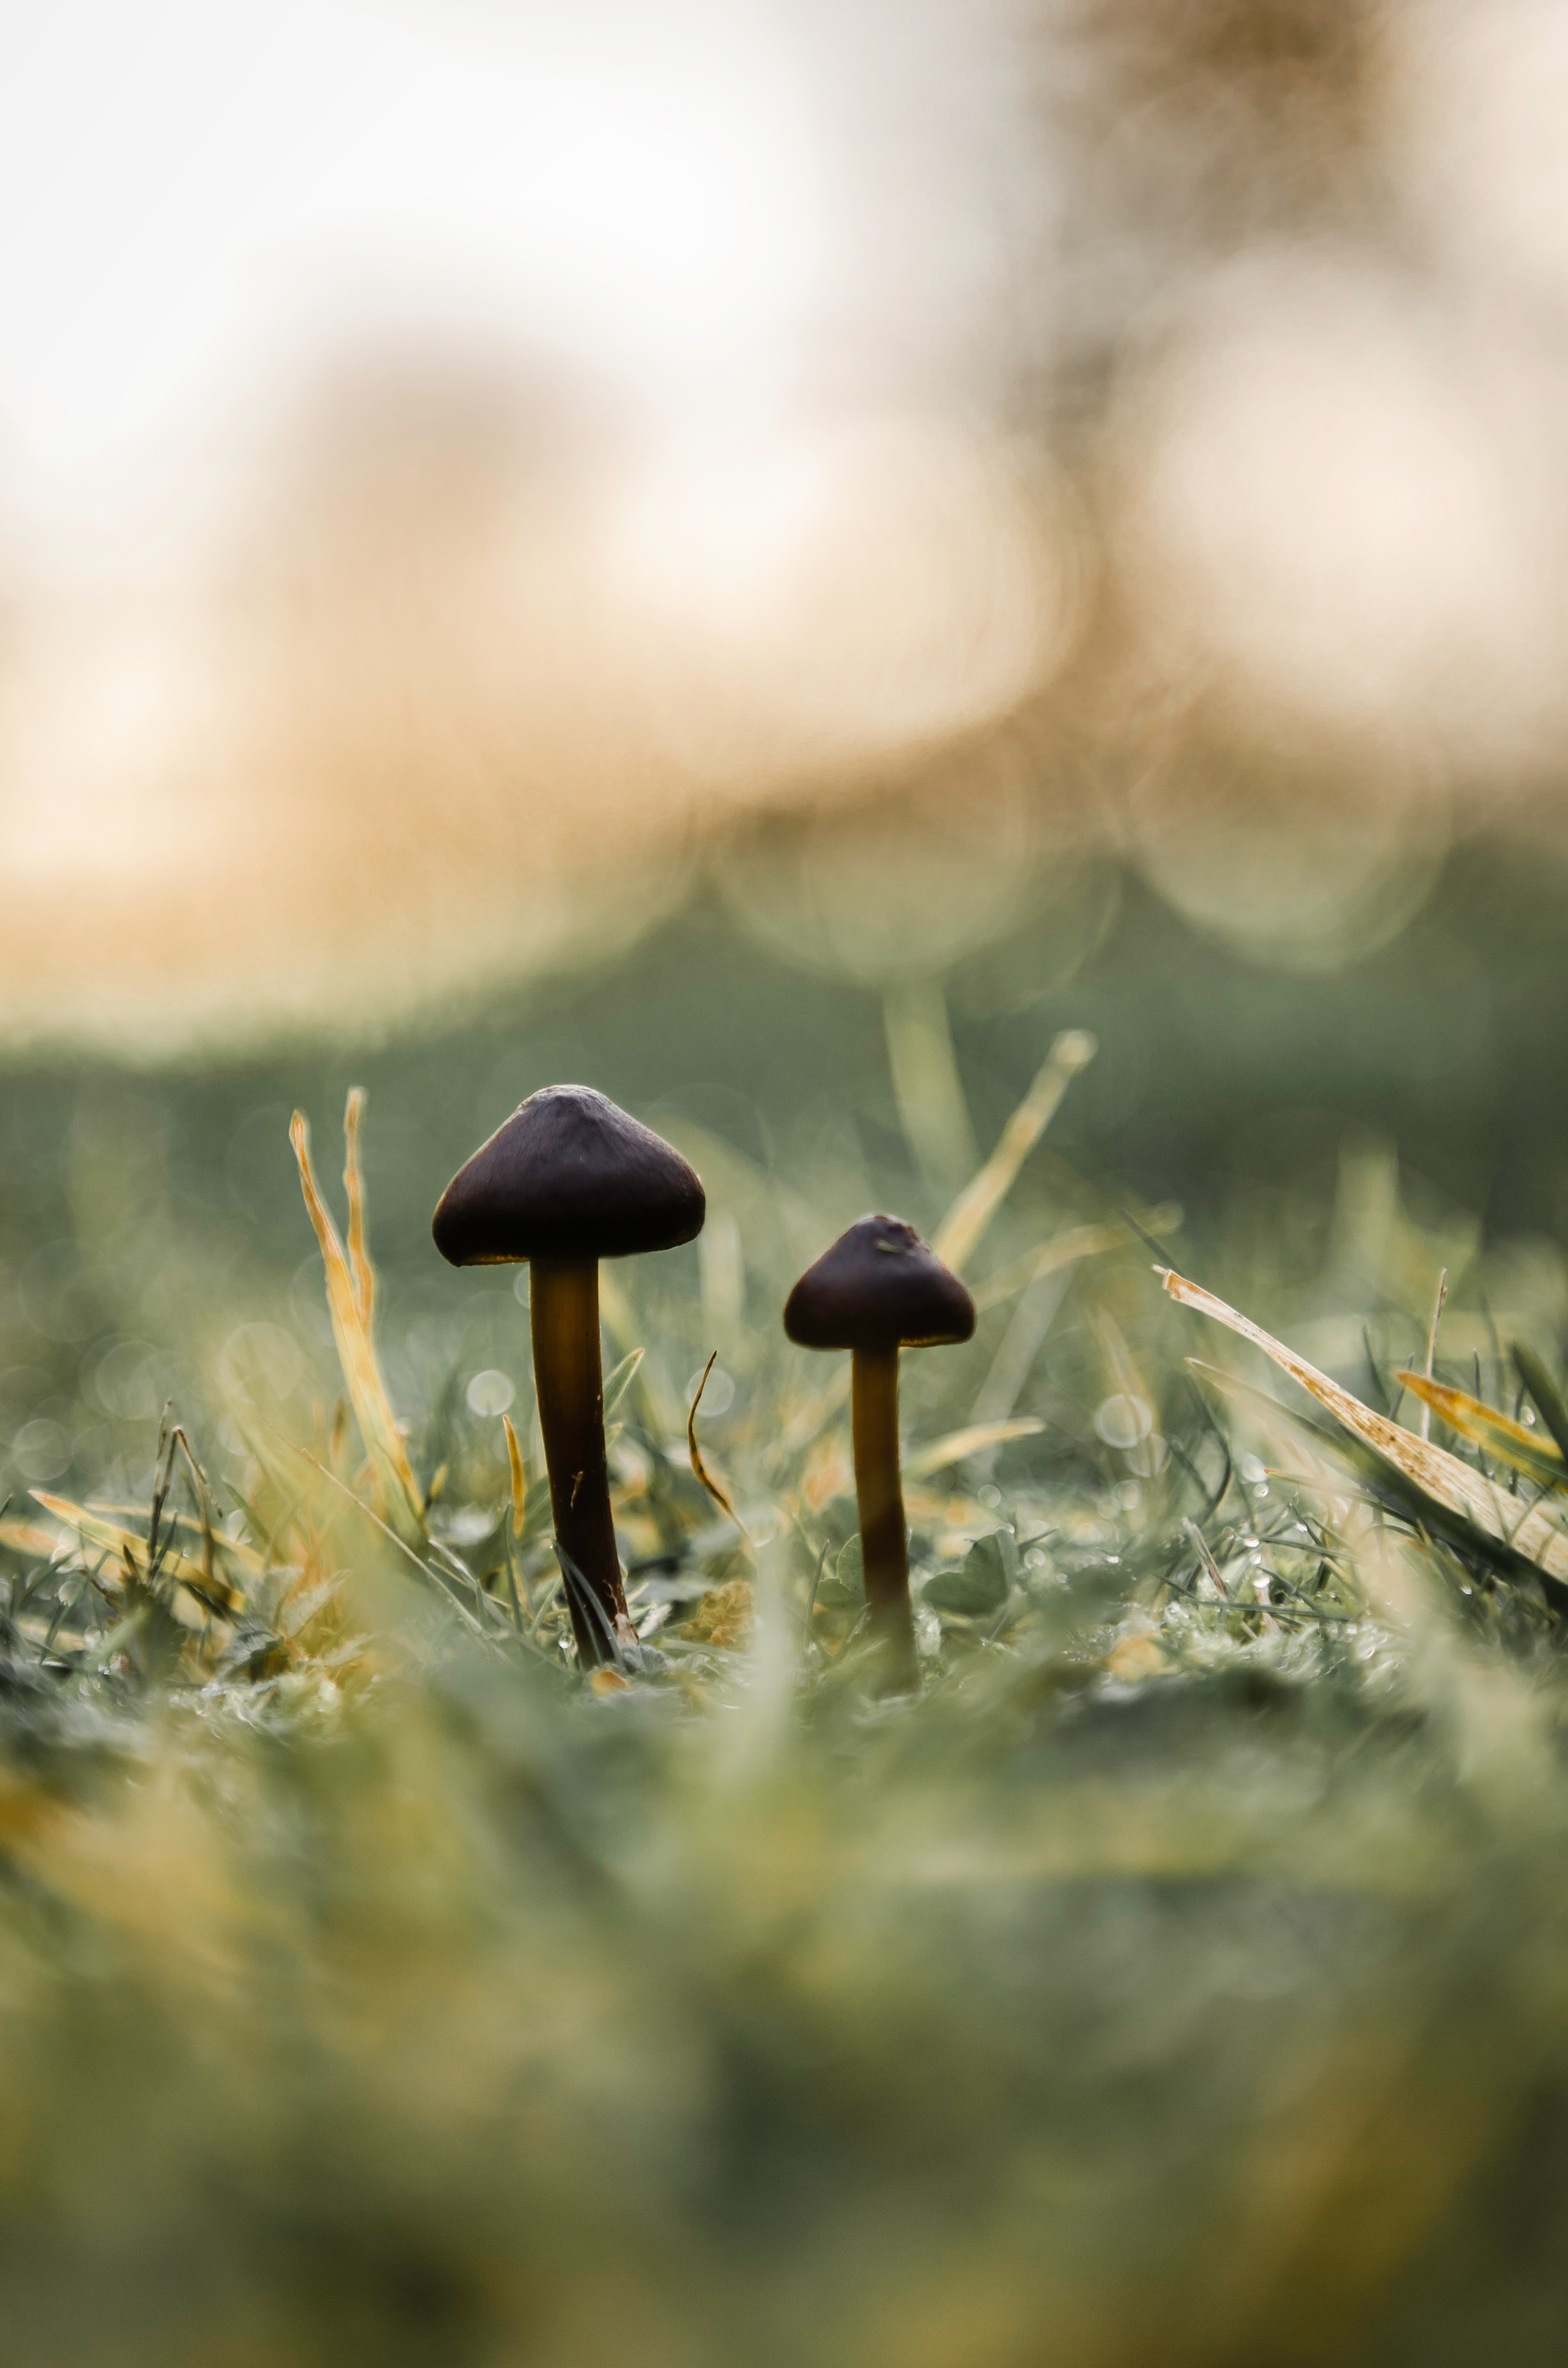 Little Mushrooms, Brother, Friend, Green, Little, HQ Photo